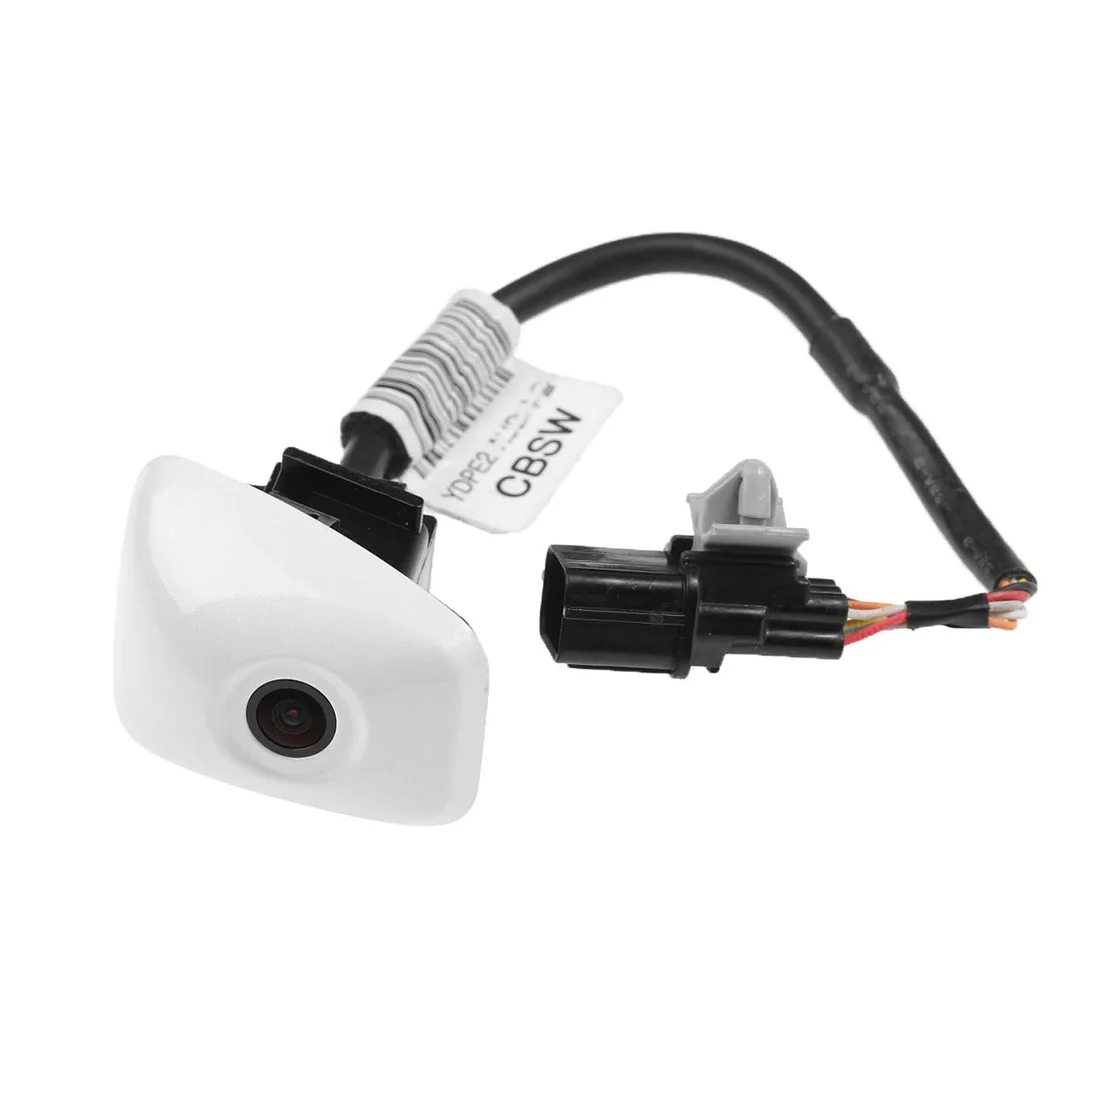 

95760-A7CB0-SW Rear View Camera Backup Park Assist Camera for Kia K3 Forte Car Accessories 95760A7CB0 95760-A7CB0